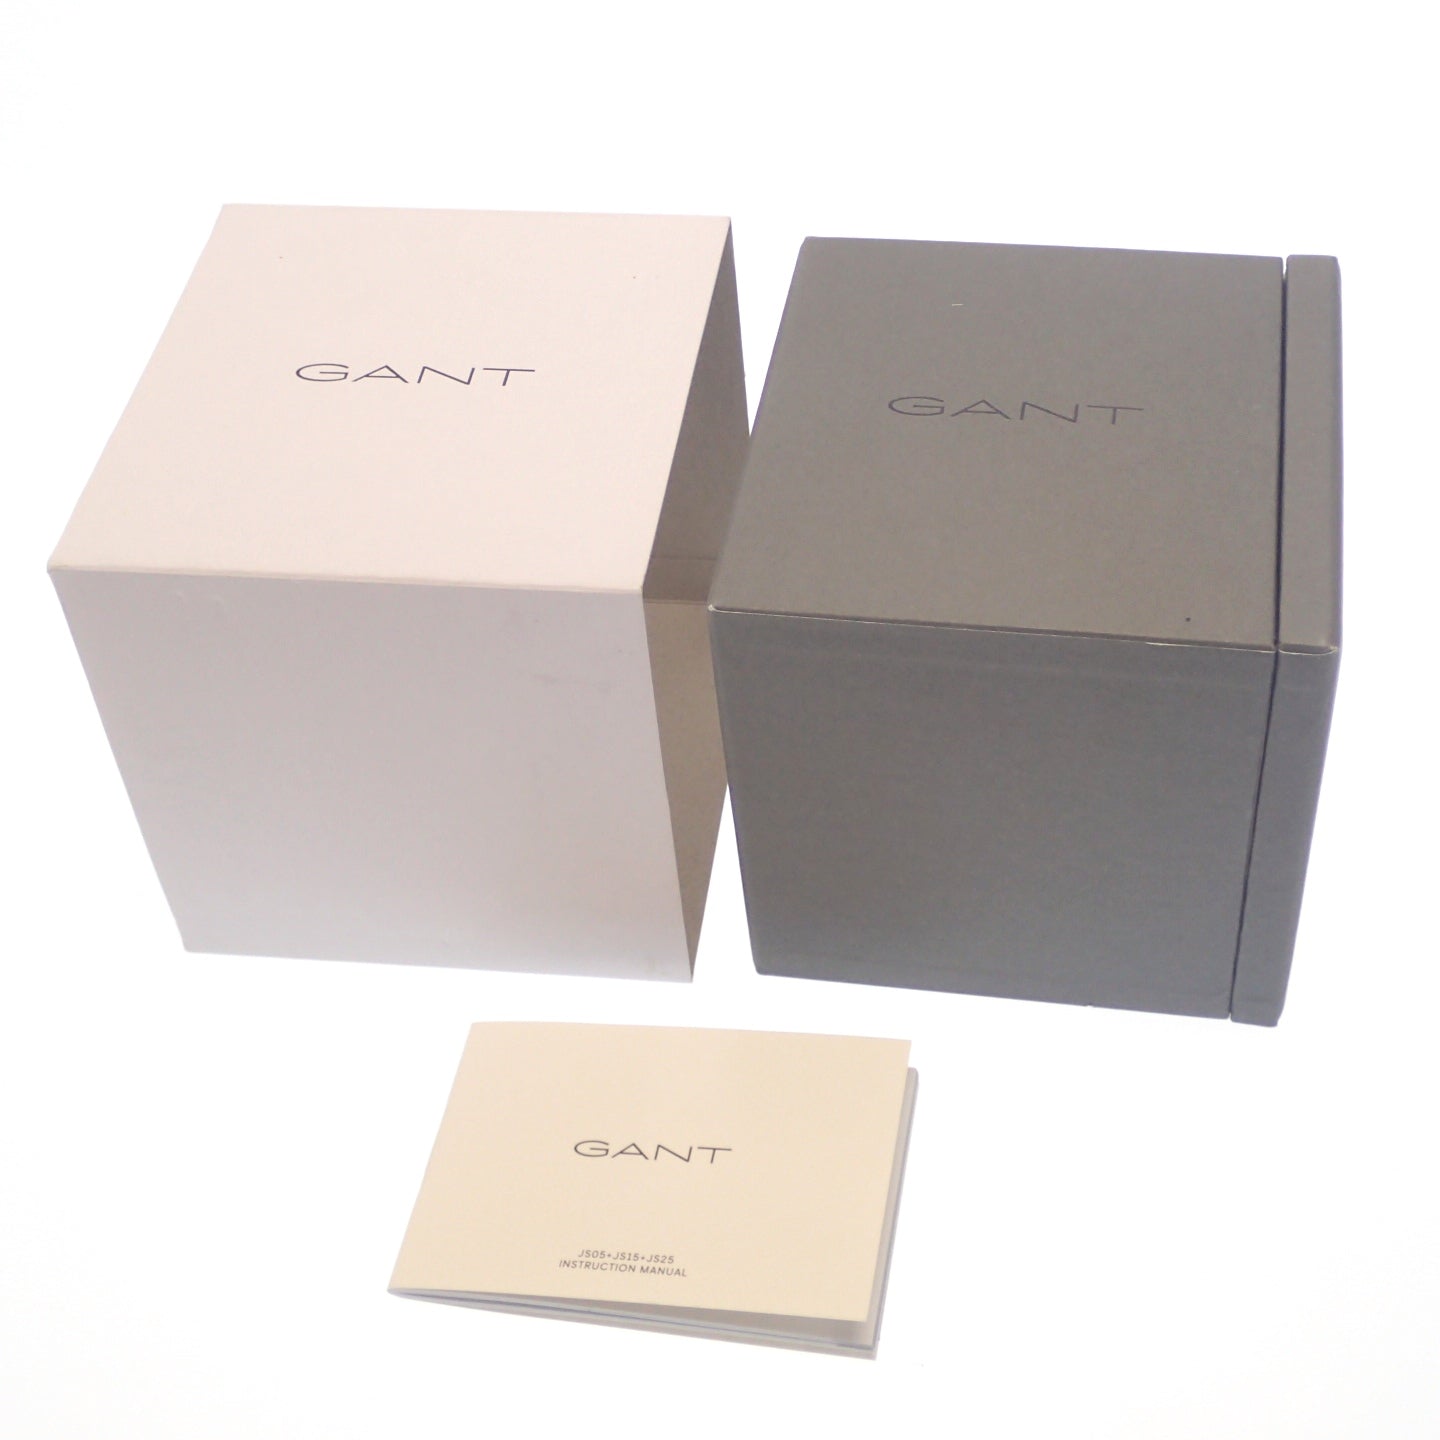 Gant 手表 石英表盘 海军蓝色 银色 盒子含 GANT [AFI18] [二手] 